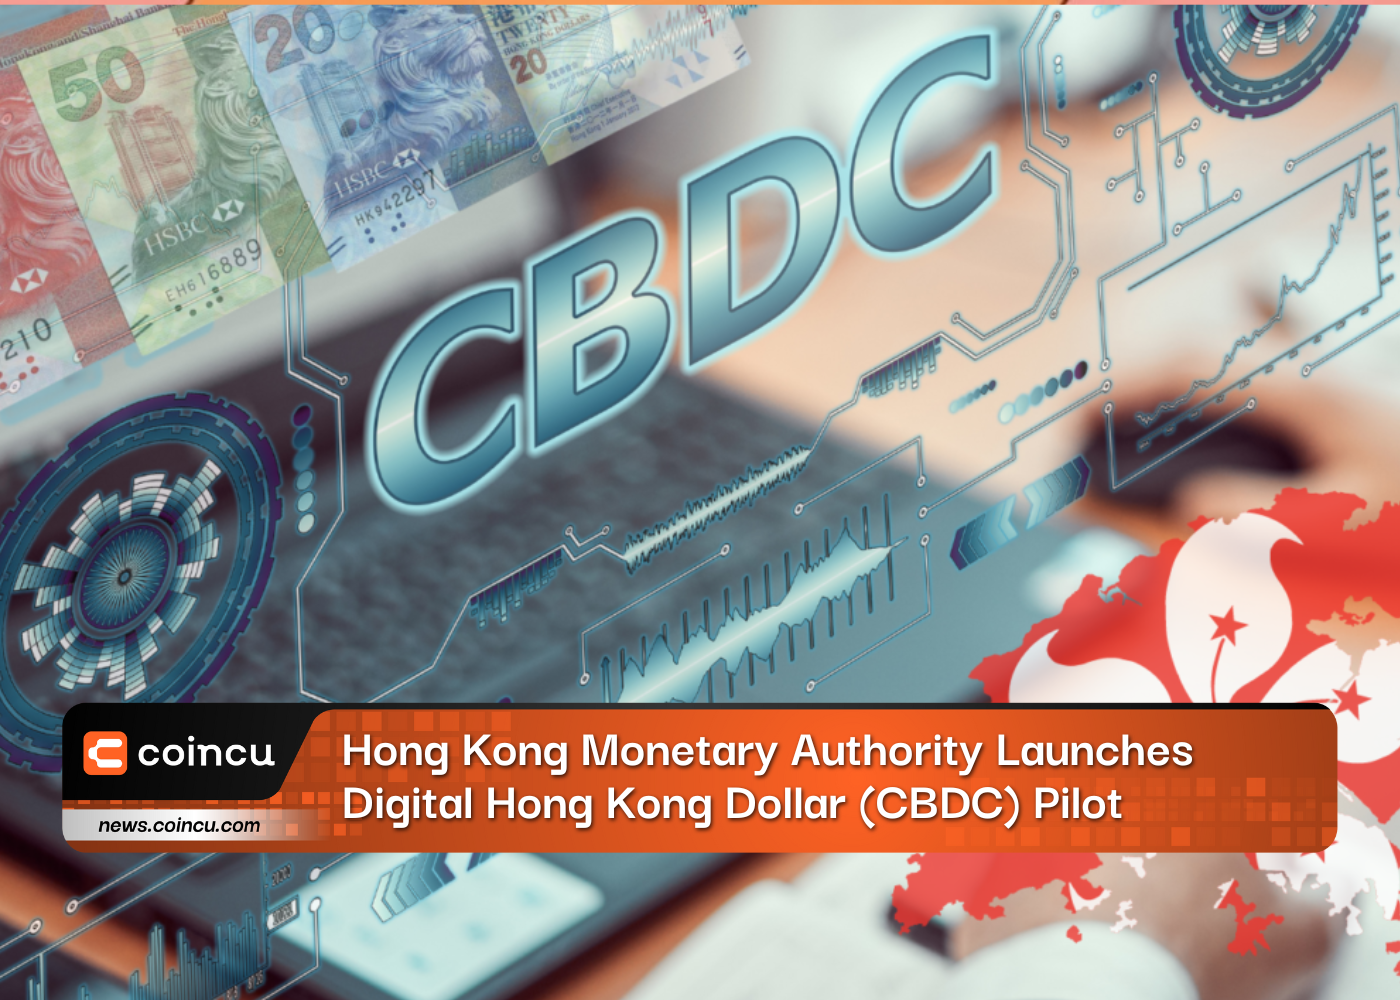 Hong Kong Monetary Authority Launches Digital Hong Kong Dollar (CBDC) Pilot